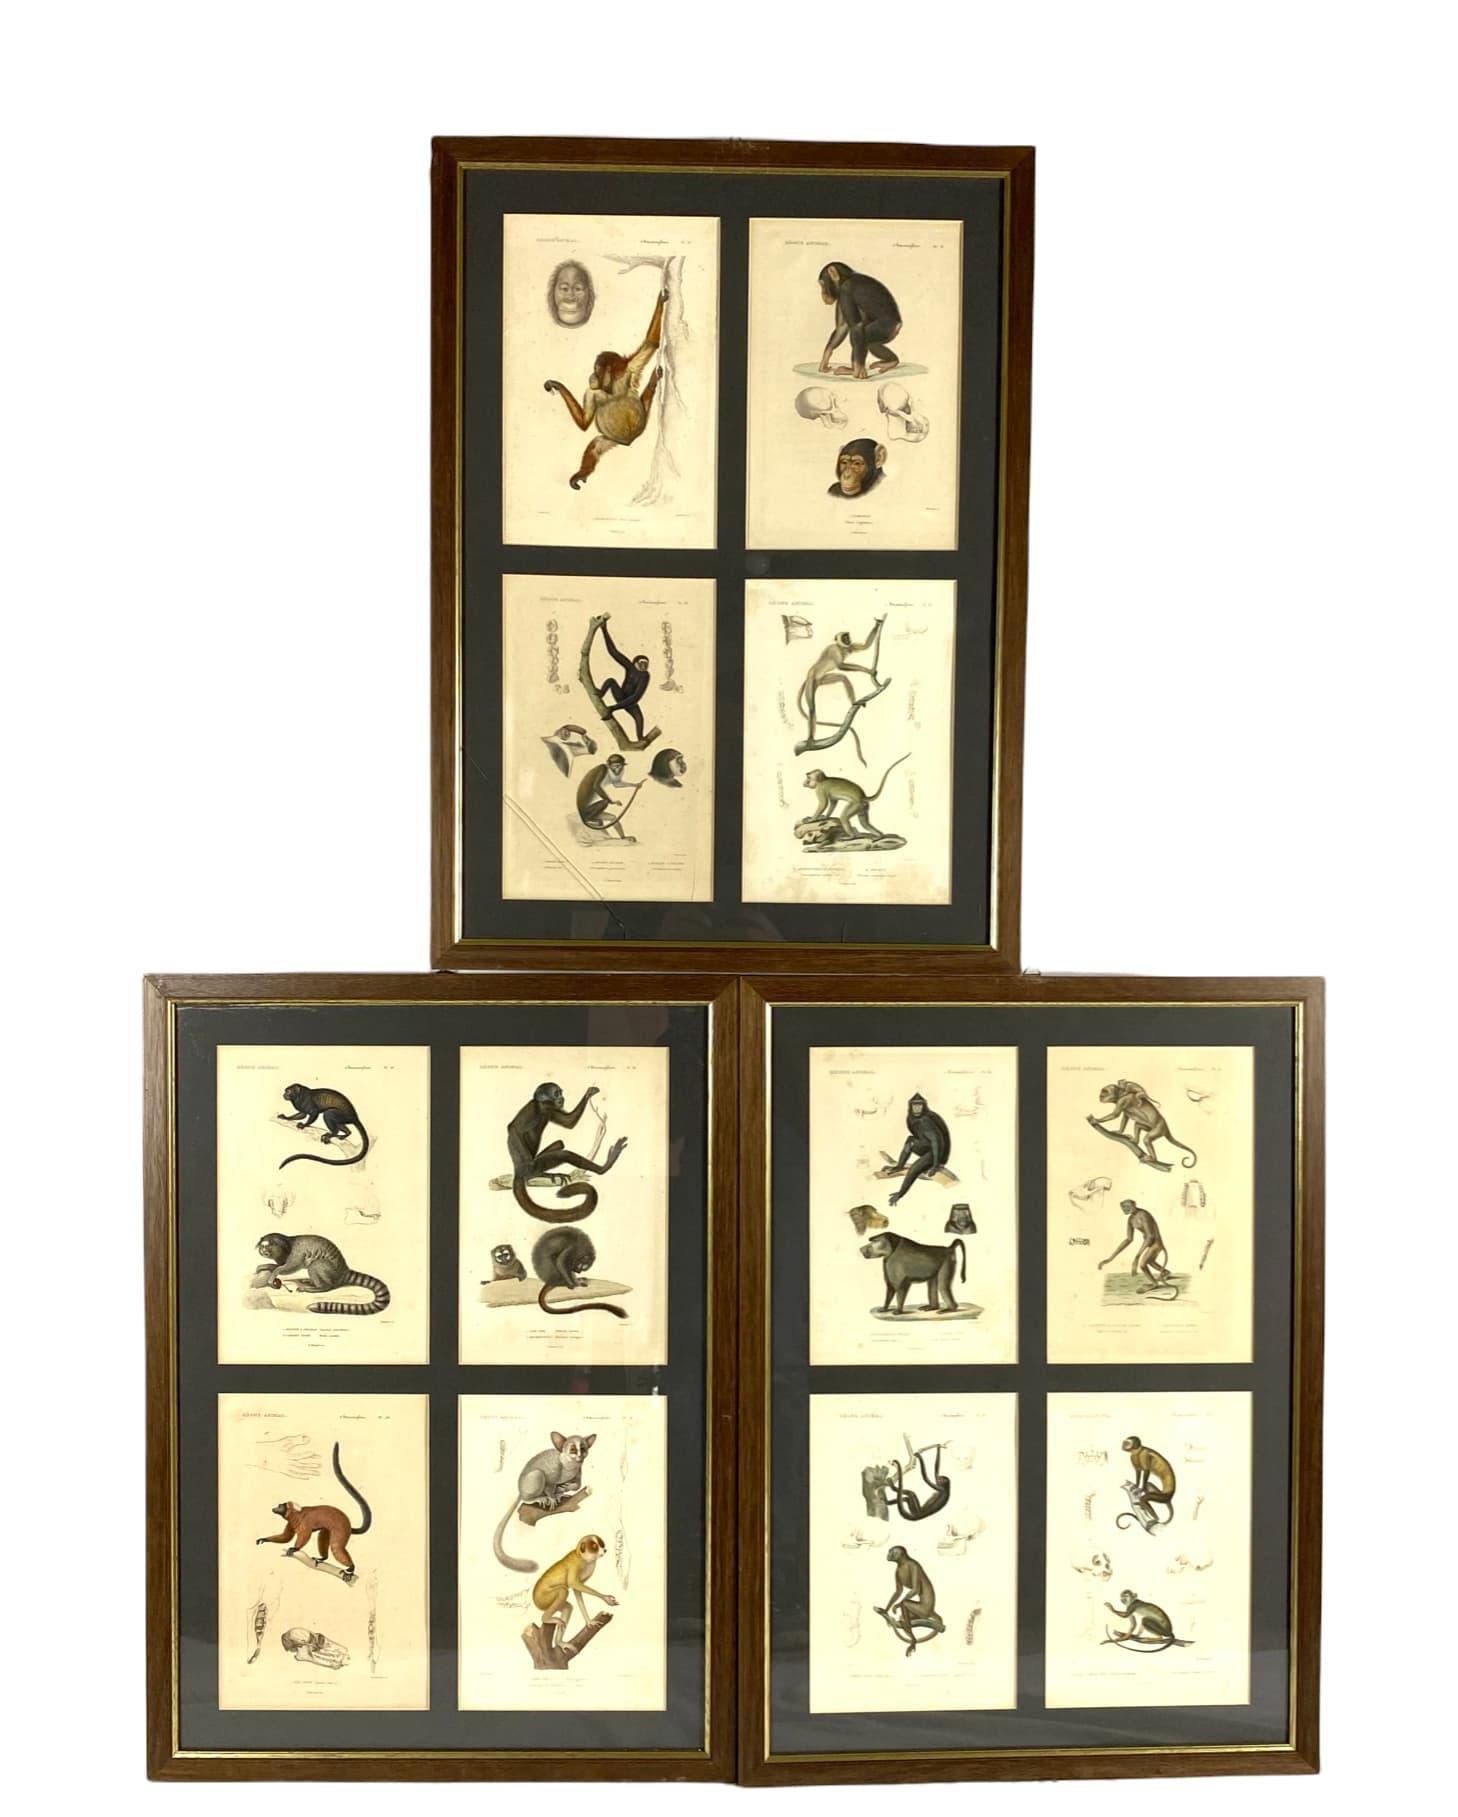 19th Century Monkeys Prints, 12 Engravings from 